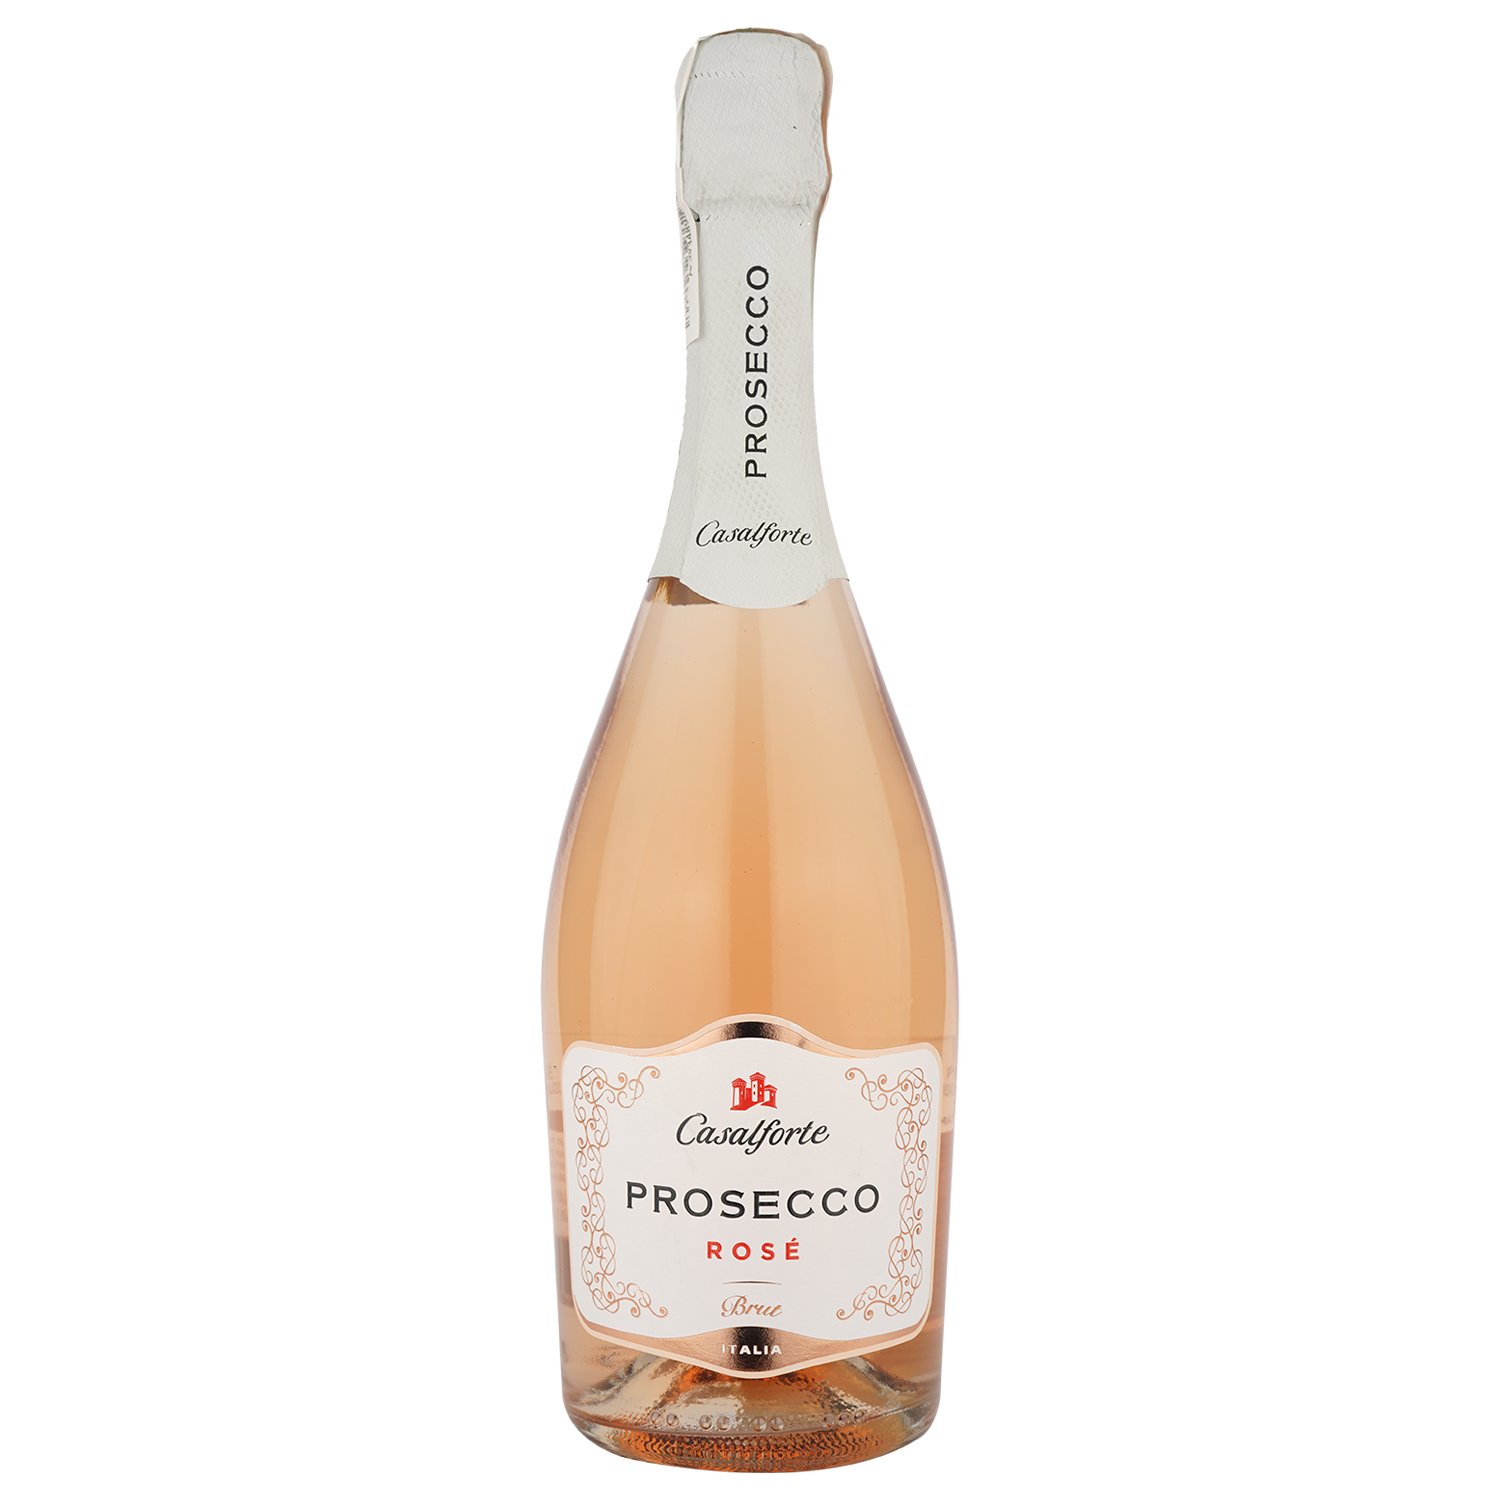 Ігристе вино Casalforte Prosecco Rose Spumante Brut, рожеве, брют, 0,75 л - фото 1